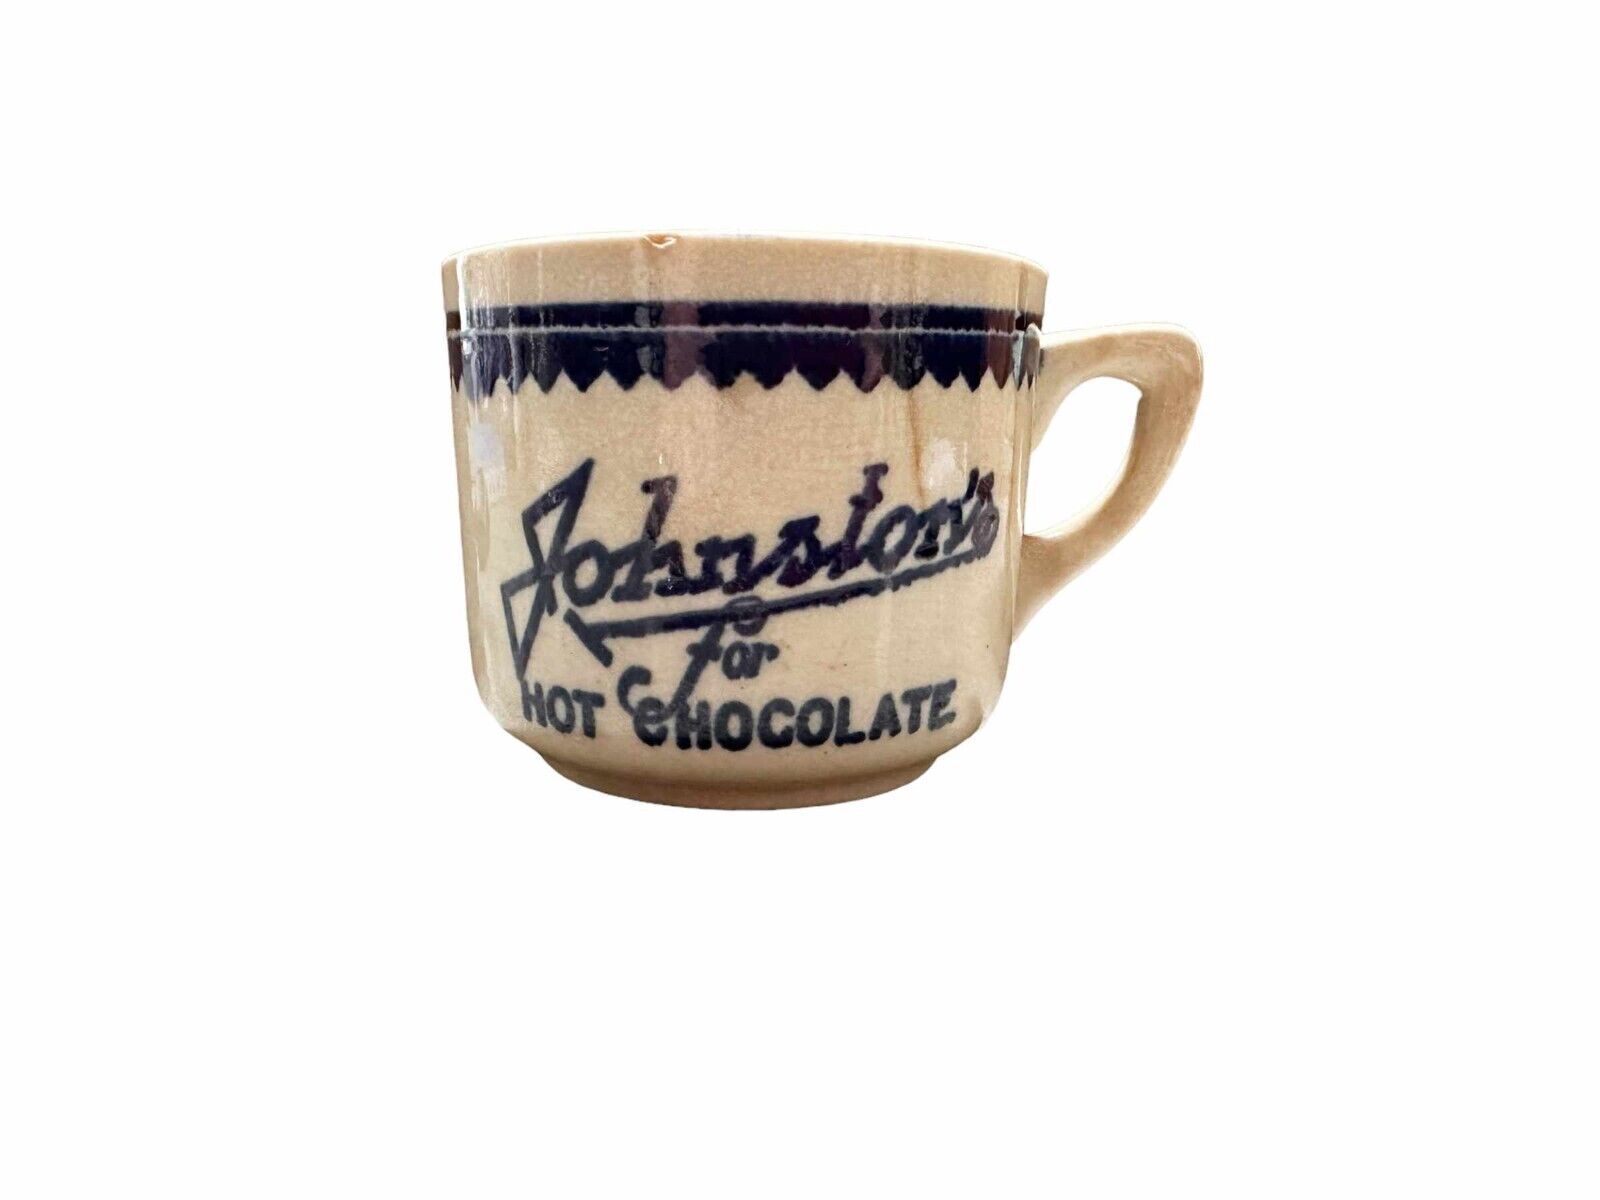 JOHNSTON'S Hot Chocolate Cup Vintage Antique Johnstone